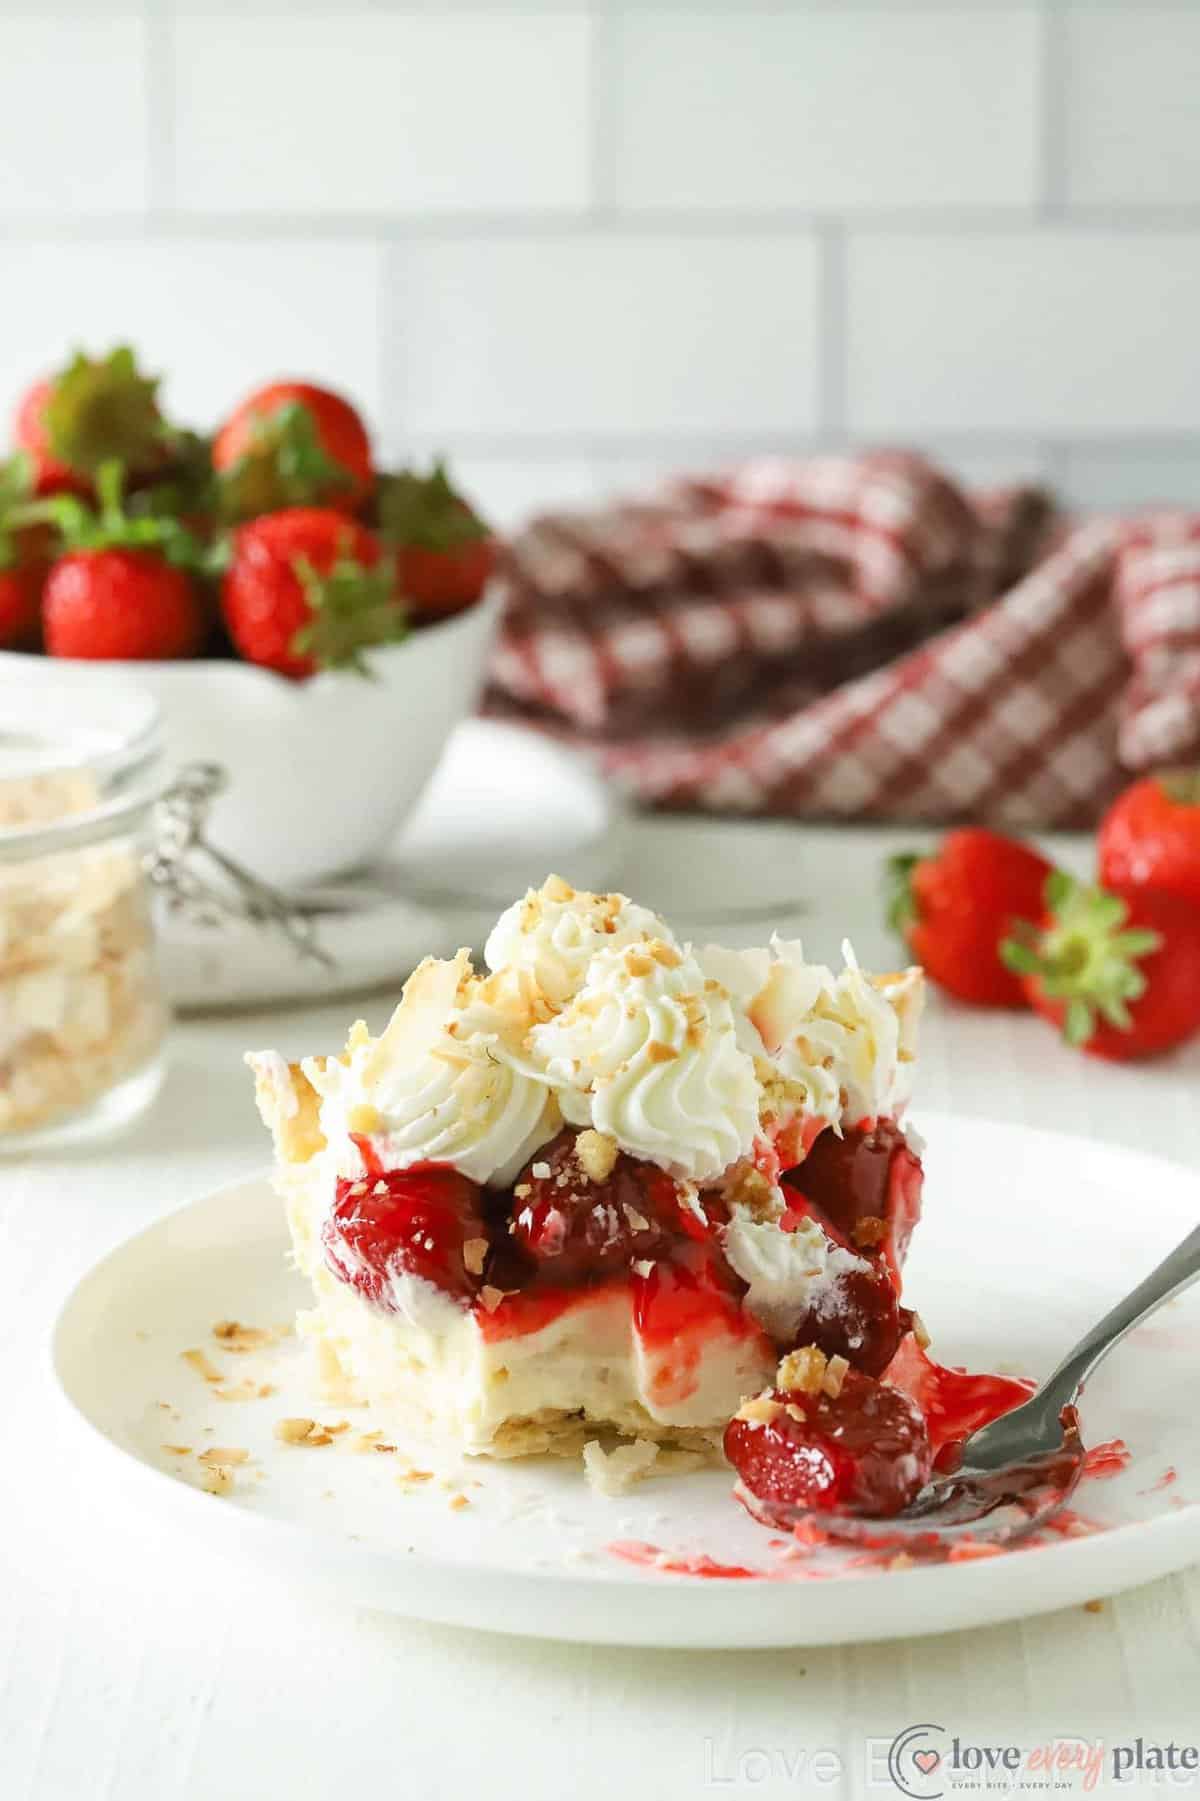  Sweet, juicy strawberries nestled in a flaky crust